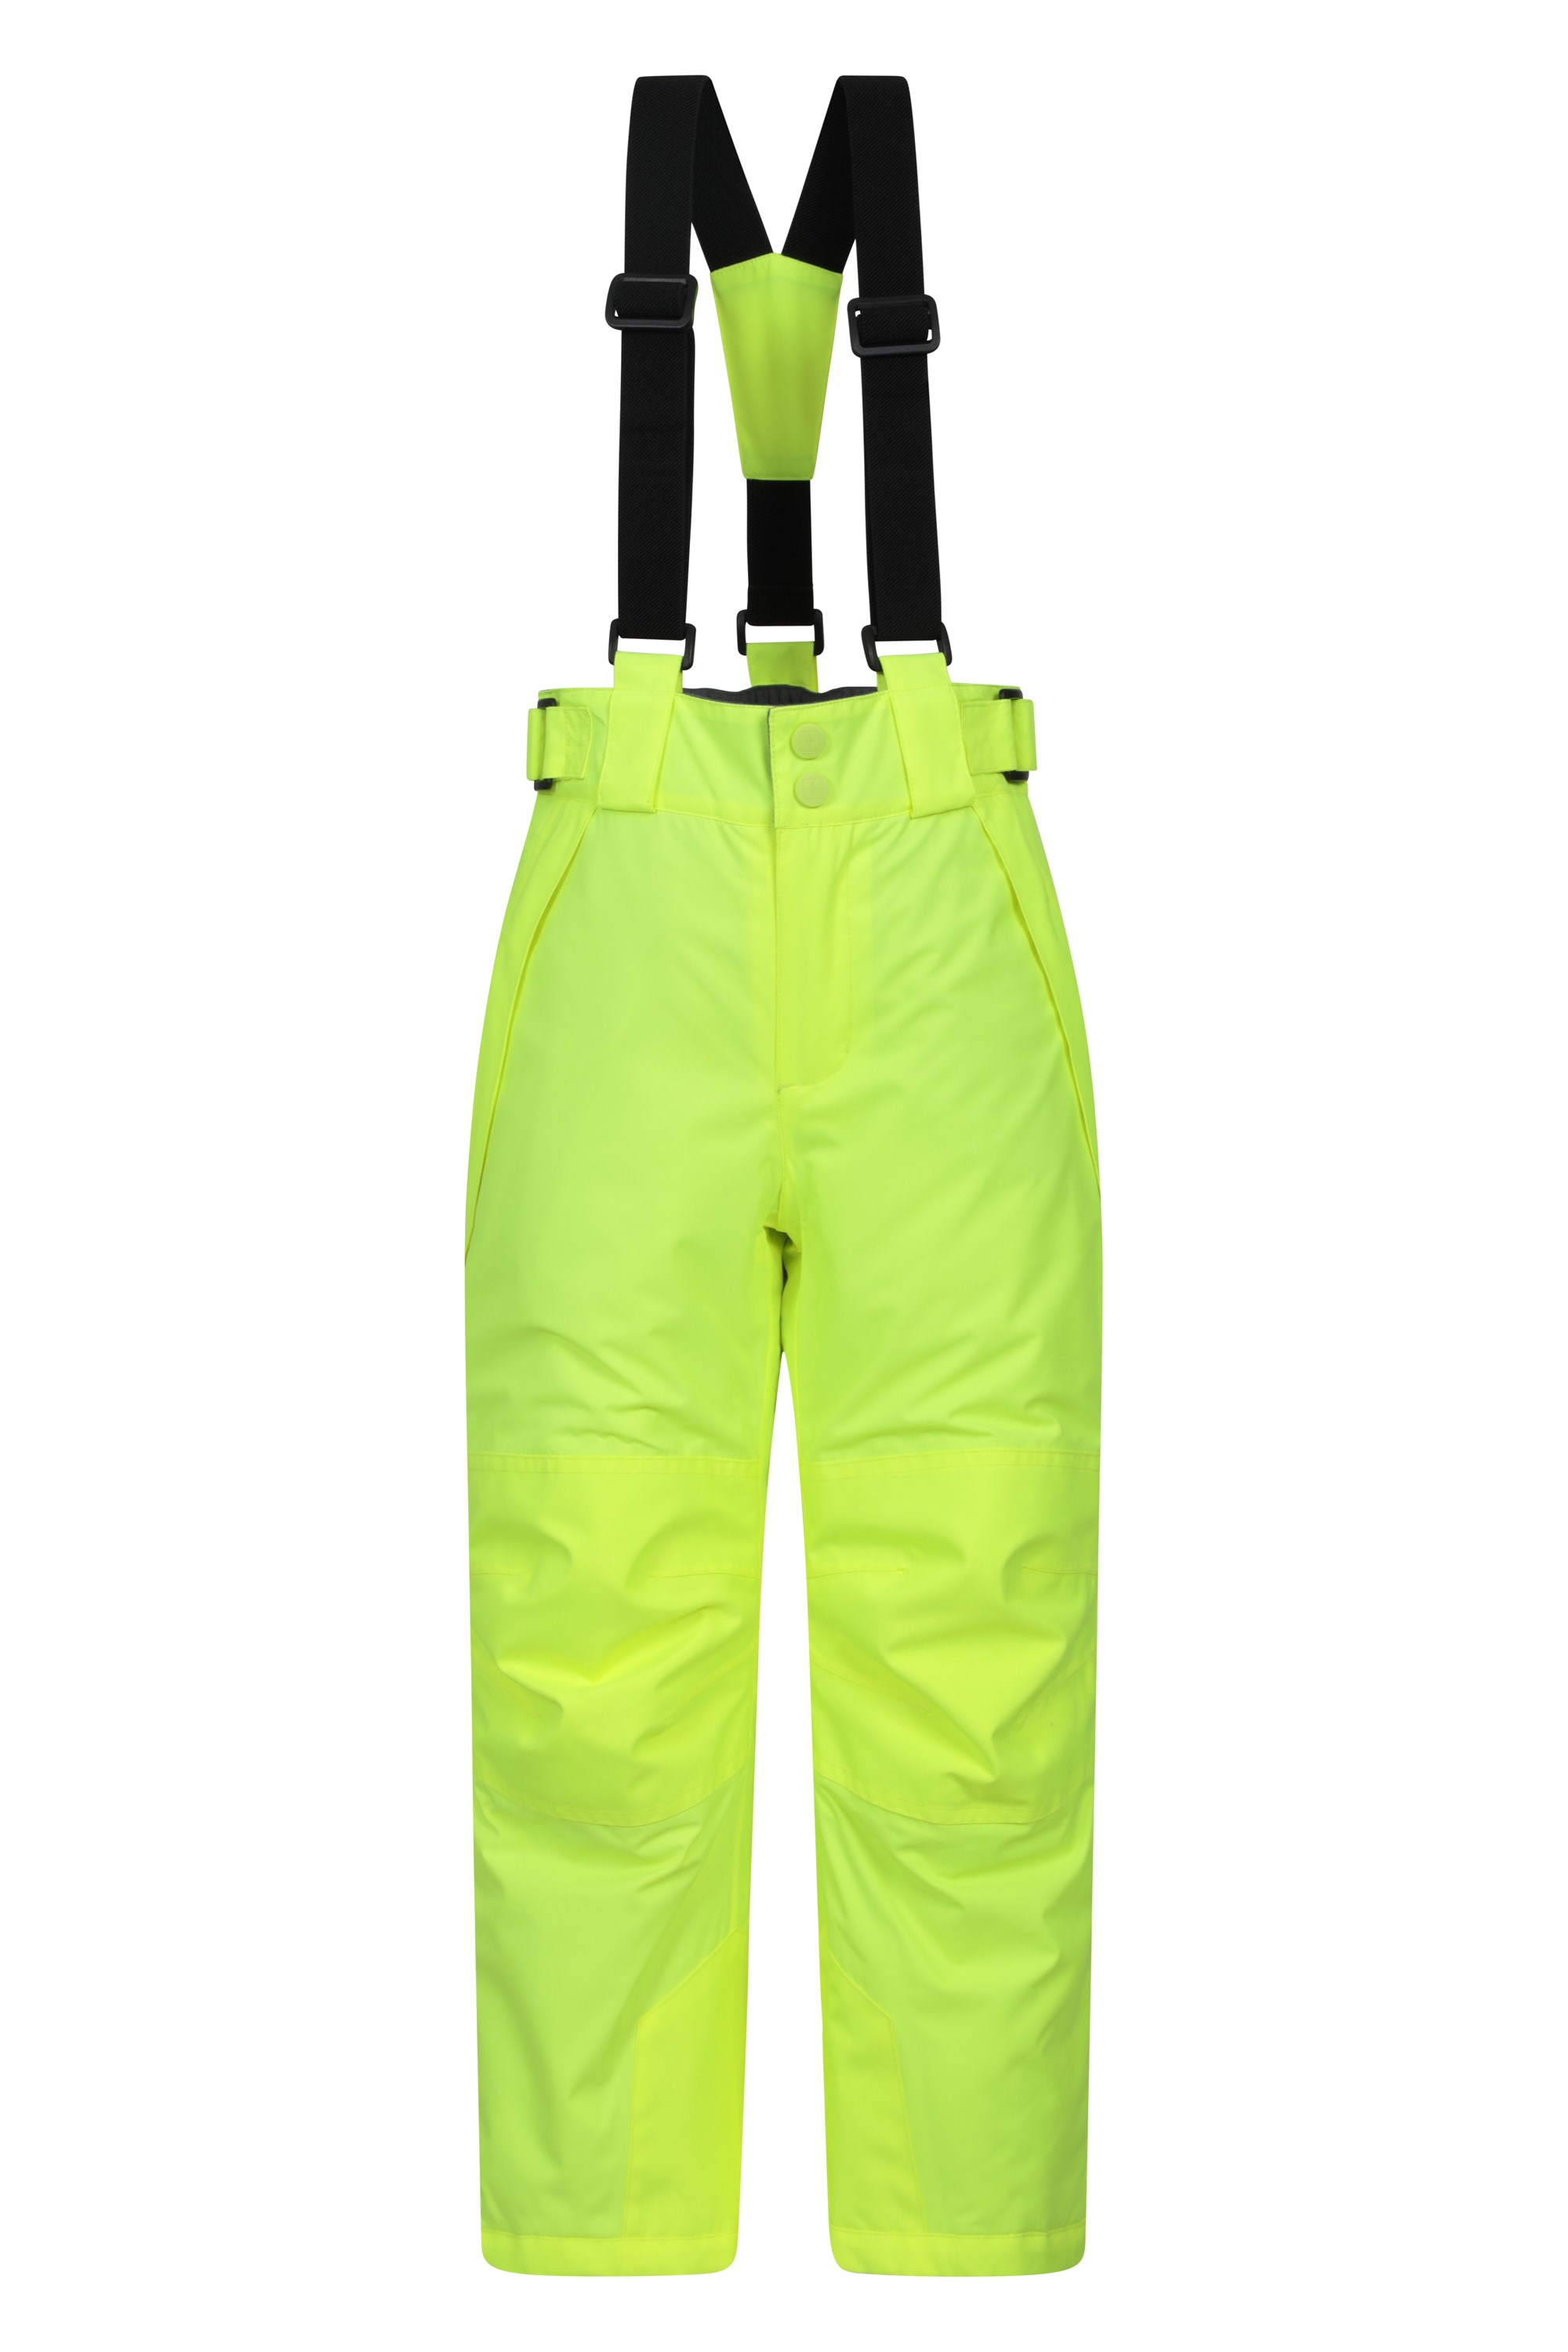 Pantalon de Ski Enfant Falcon Extreme - Jaune